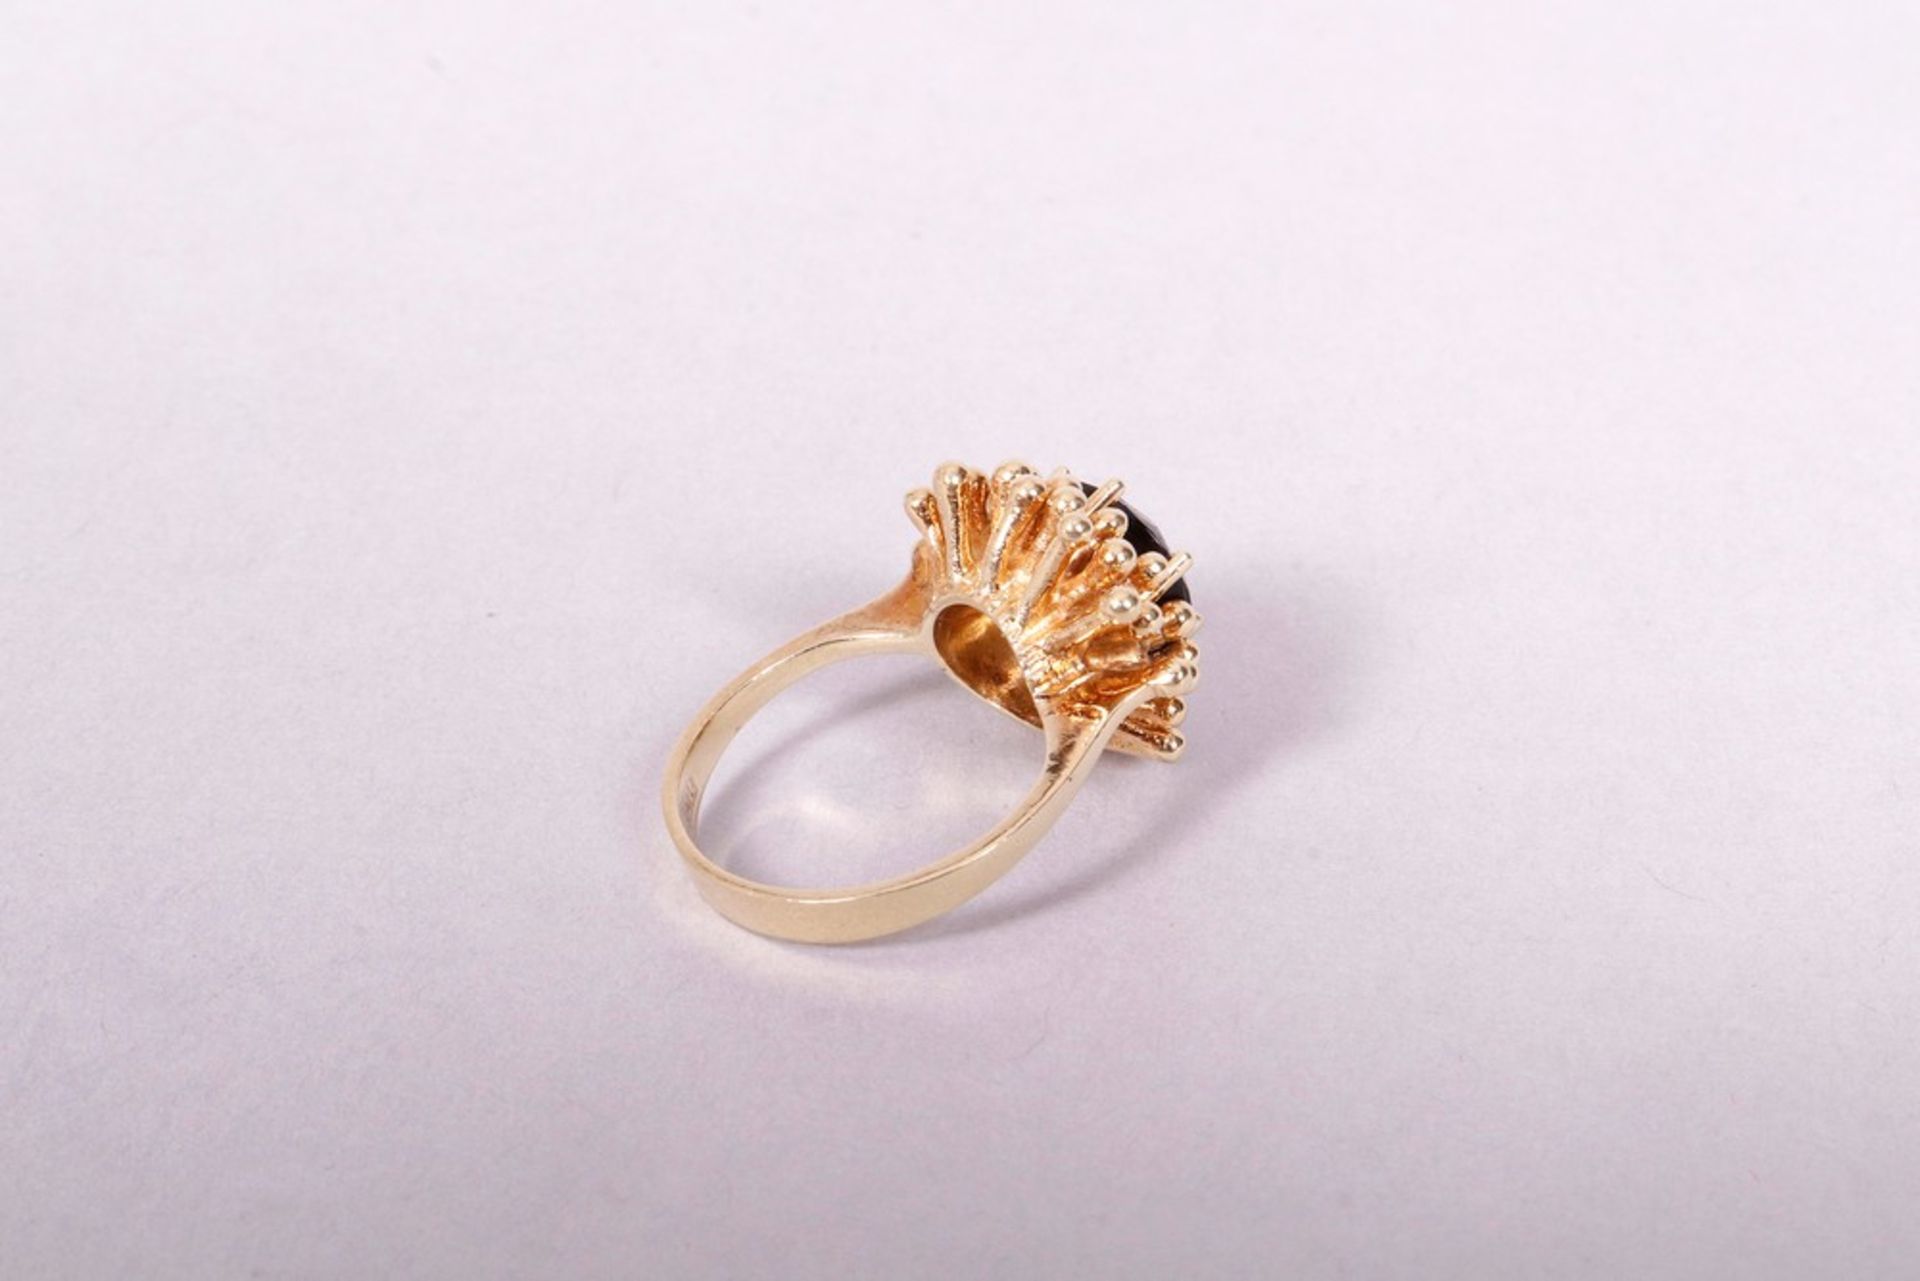 Design ring, 585 gold - Image 4 of 5